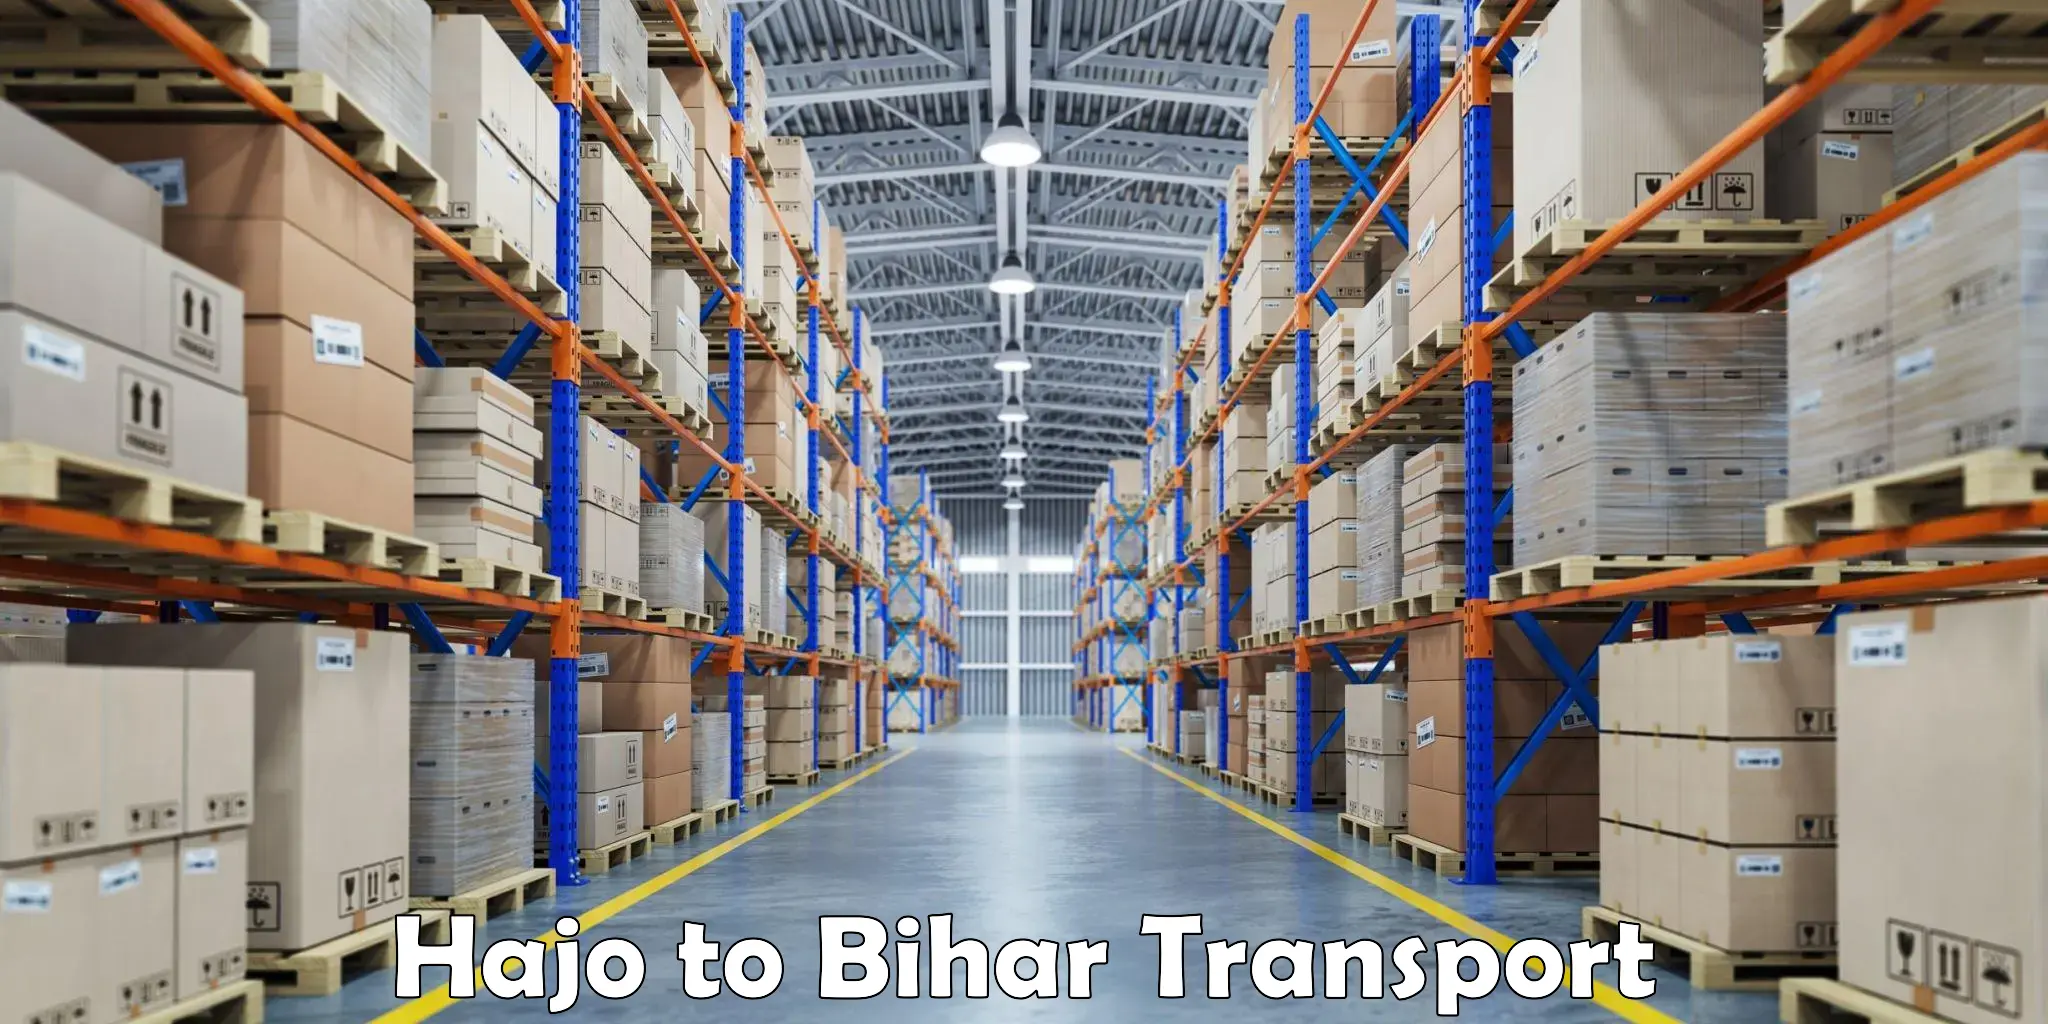 Transport in sharing Hajo to Bihar